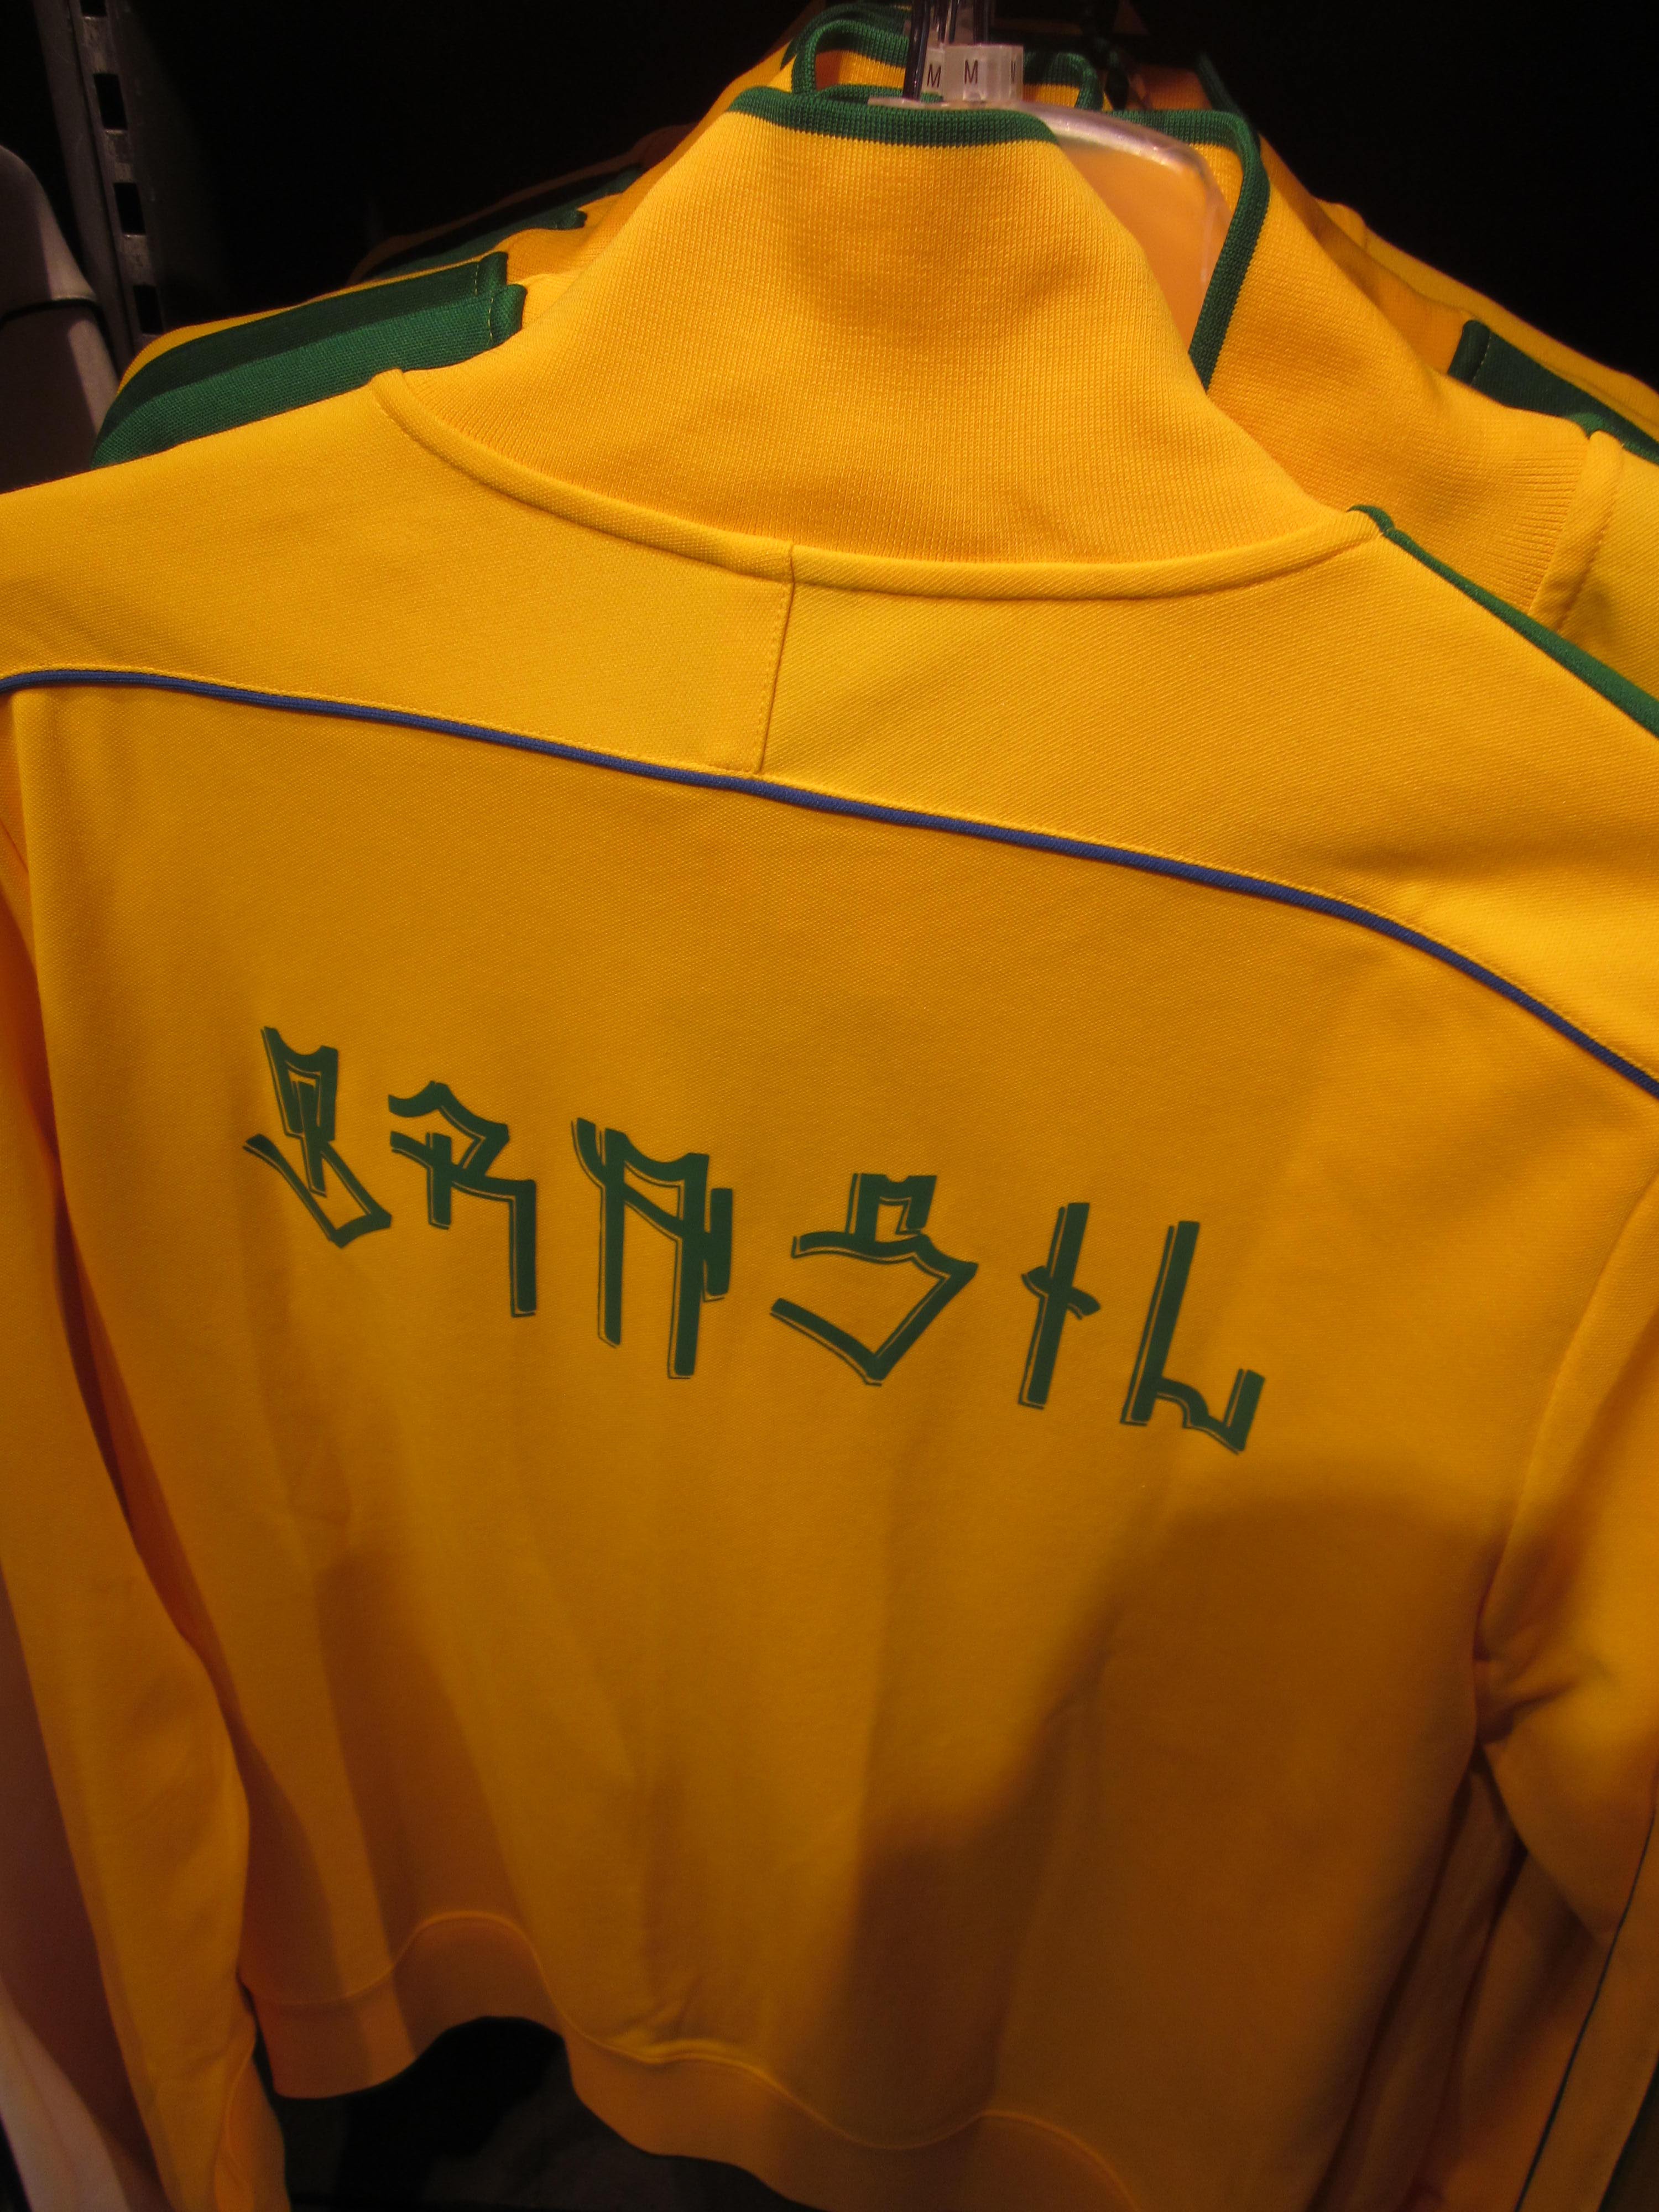 File:Nike Colab (Brazil-Nunca) Men's Soccer Track Jacket rear.JPG -  Wikimedia Commons